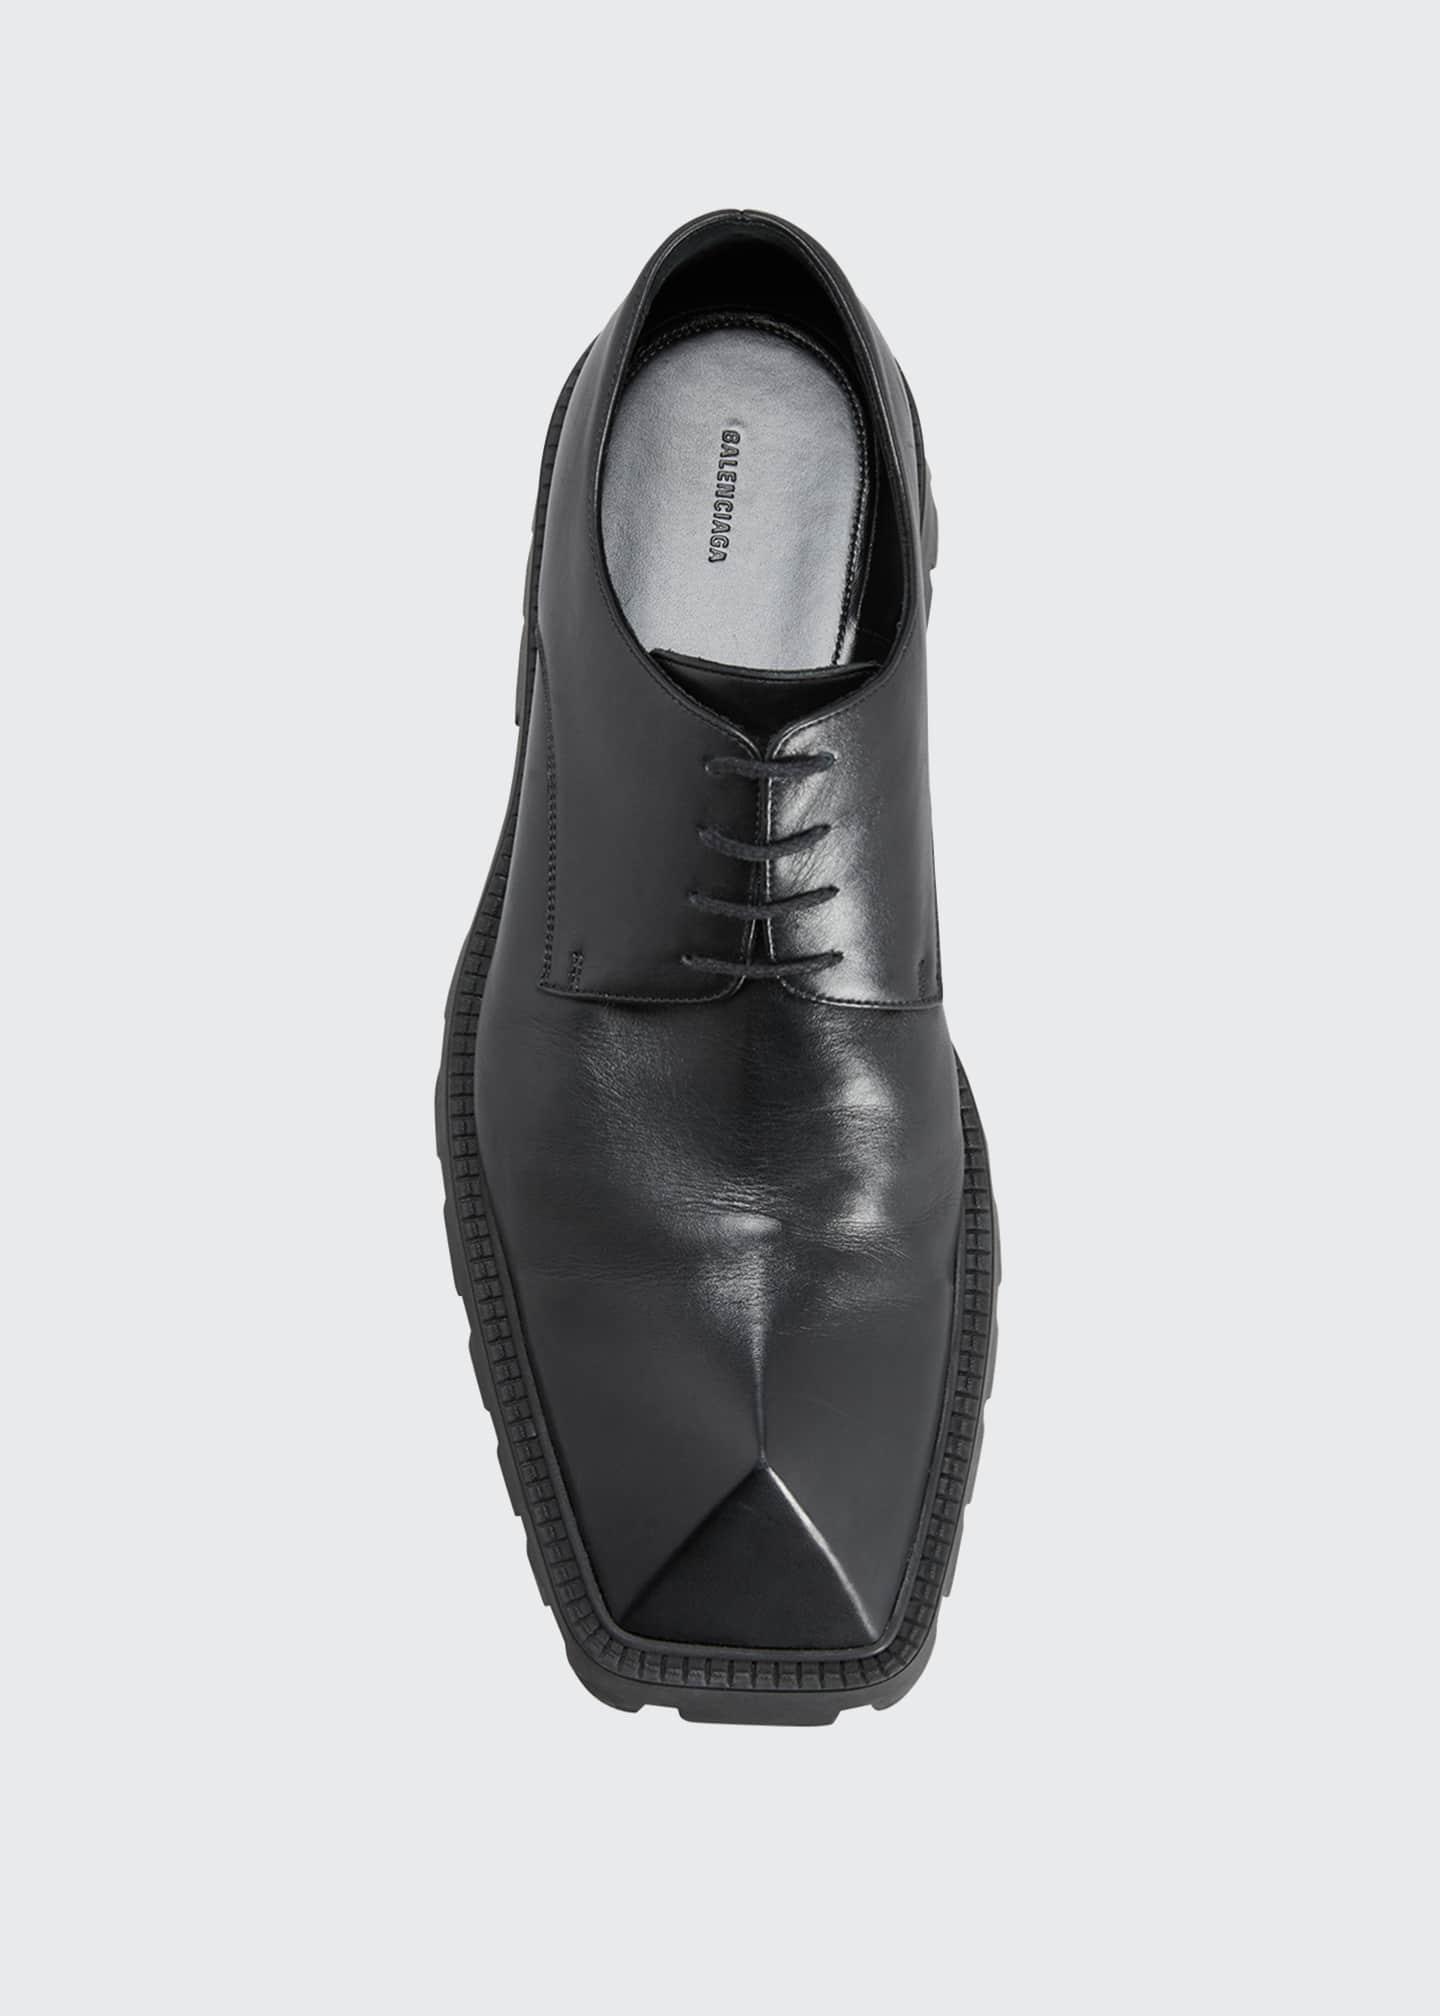 Balenciaga Men's Rhino Derby Shoes - Bergdorf Goodman